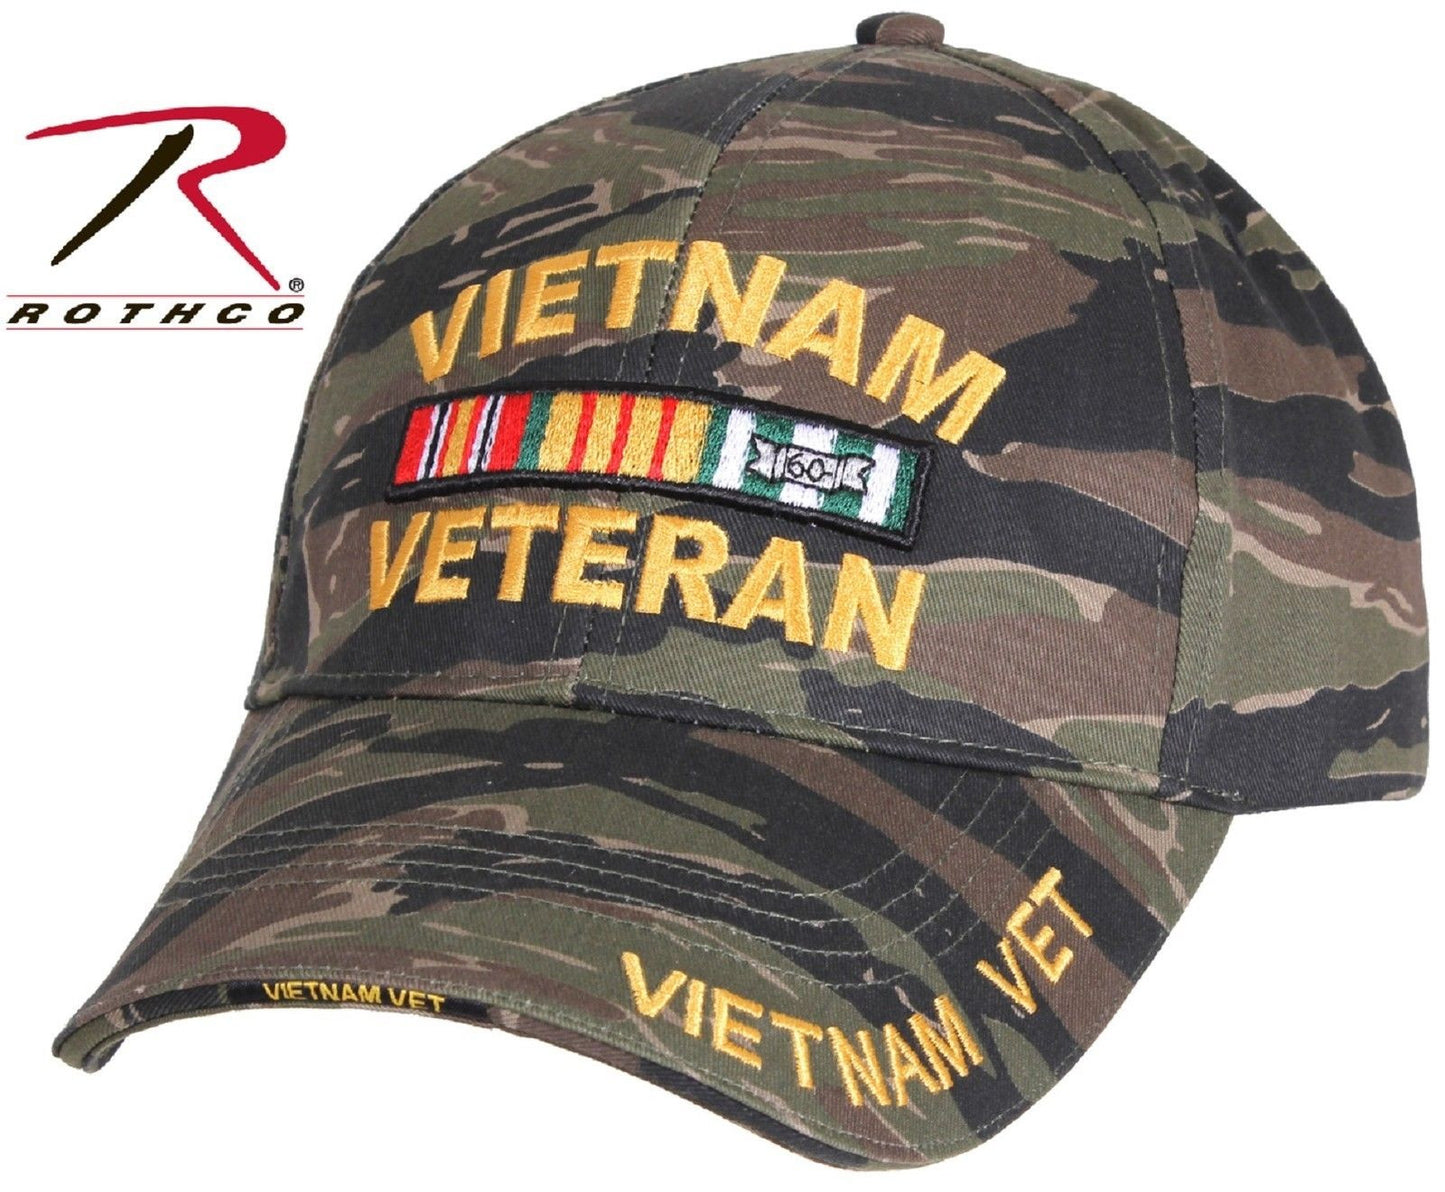 Tiger Stripe Camo VIETNAM VETERAN Adjustable Baseball Hat Rothco Camouflage Cap